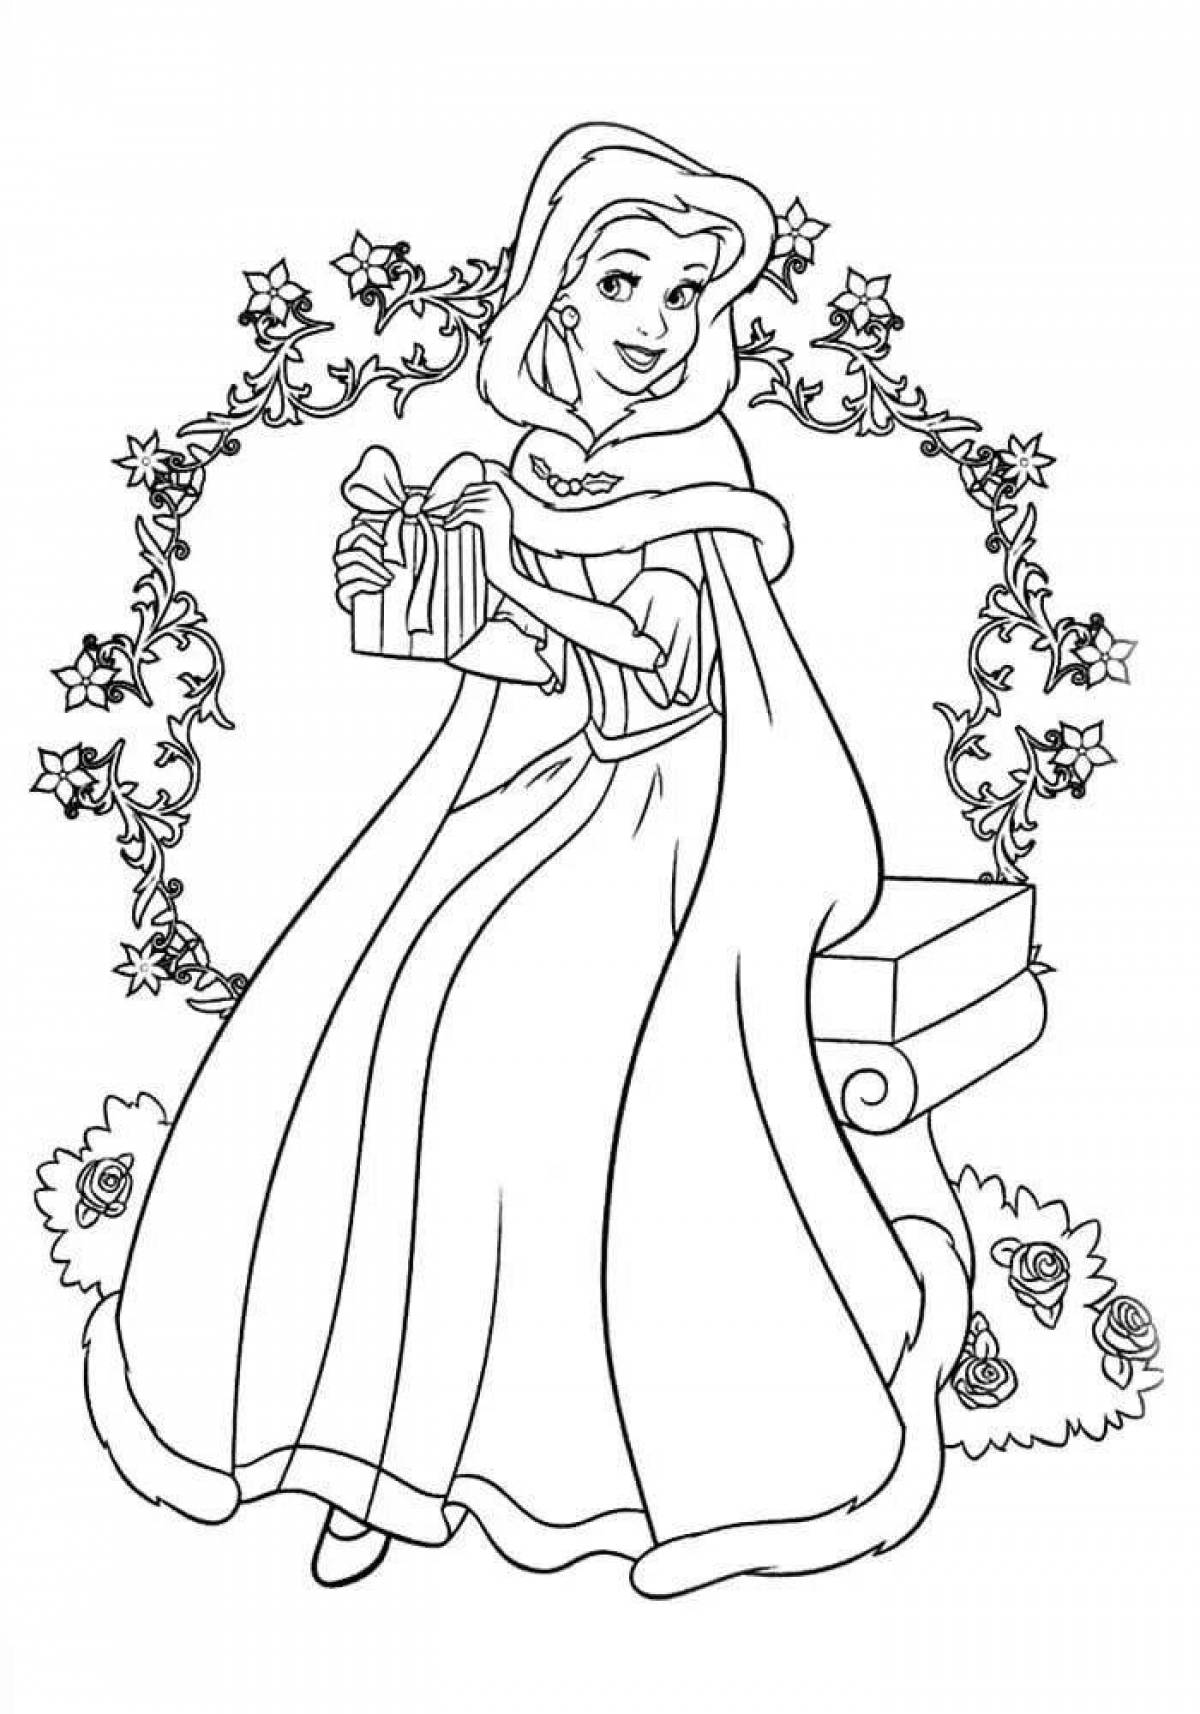 Exquisite princess belle coloring book